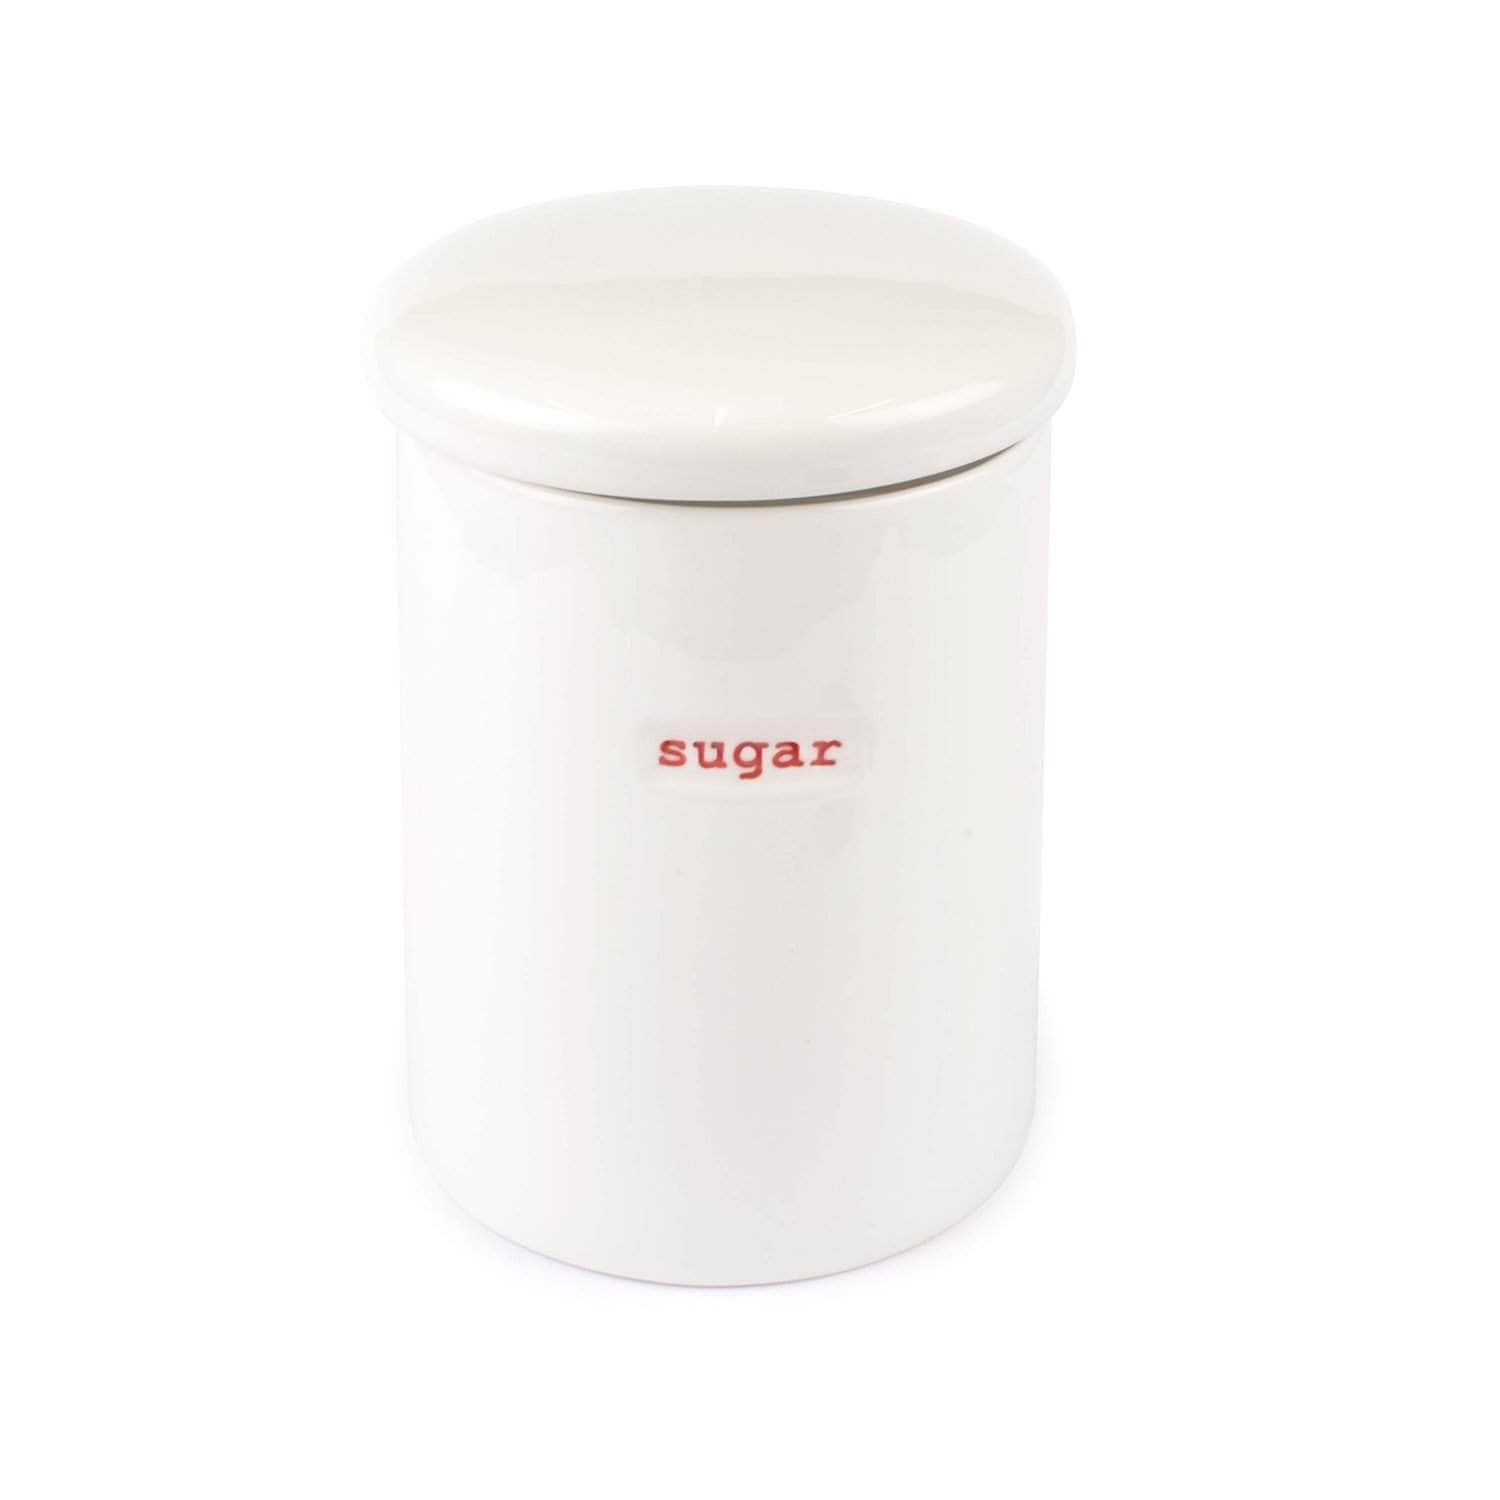 *New* Keith Brymer Jones storage jar: Sugar